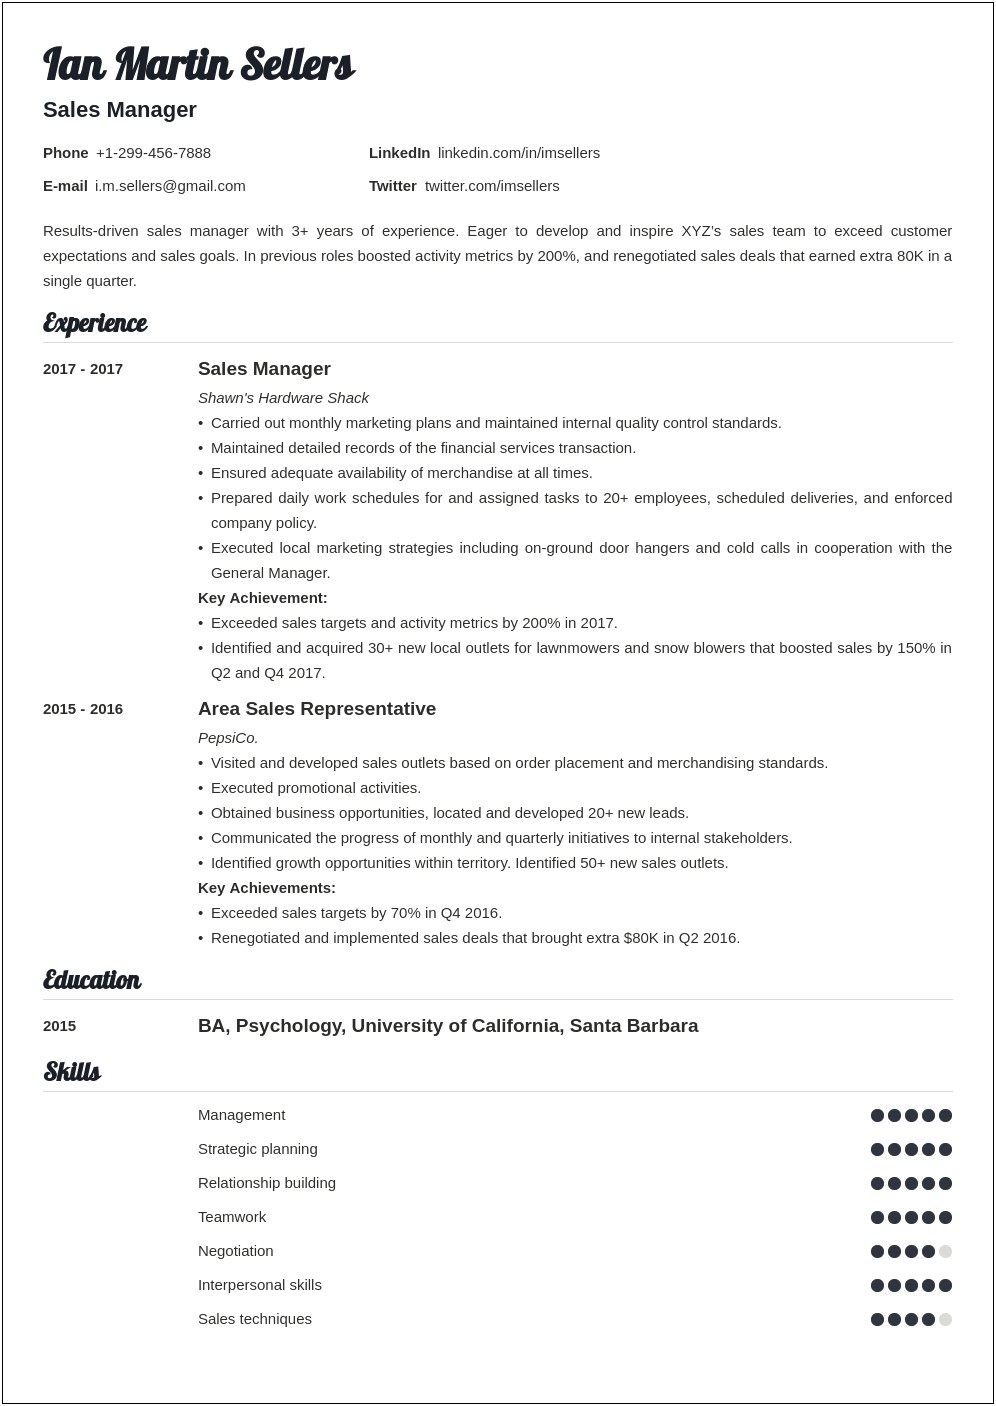 Resume Description For It Sales Manager